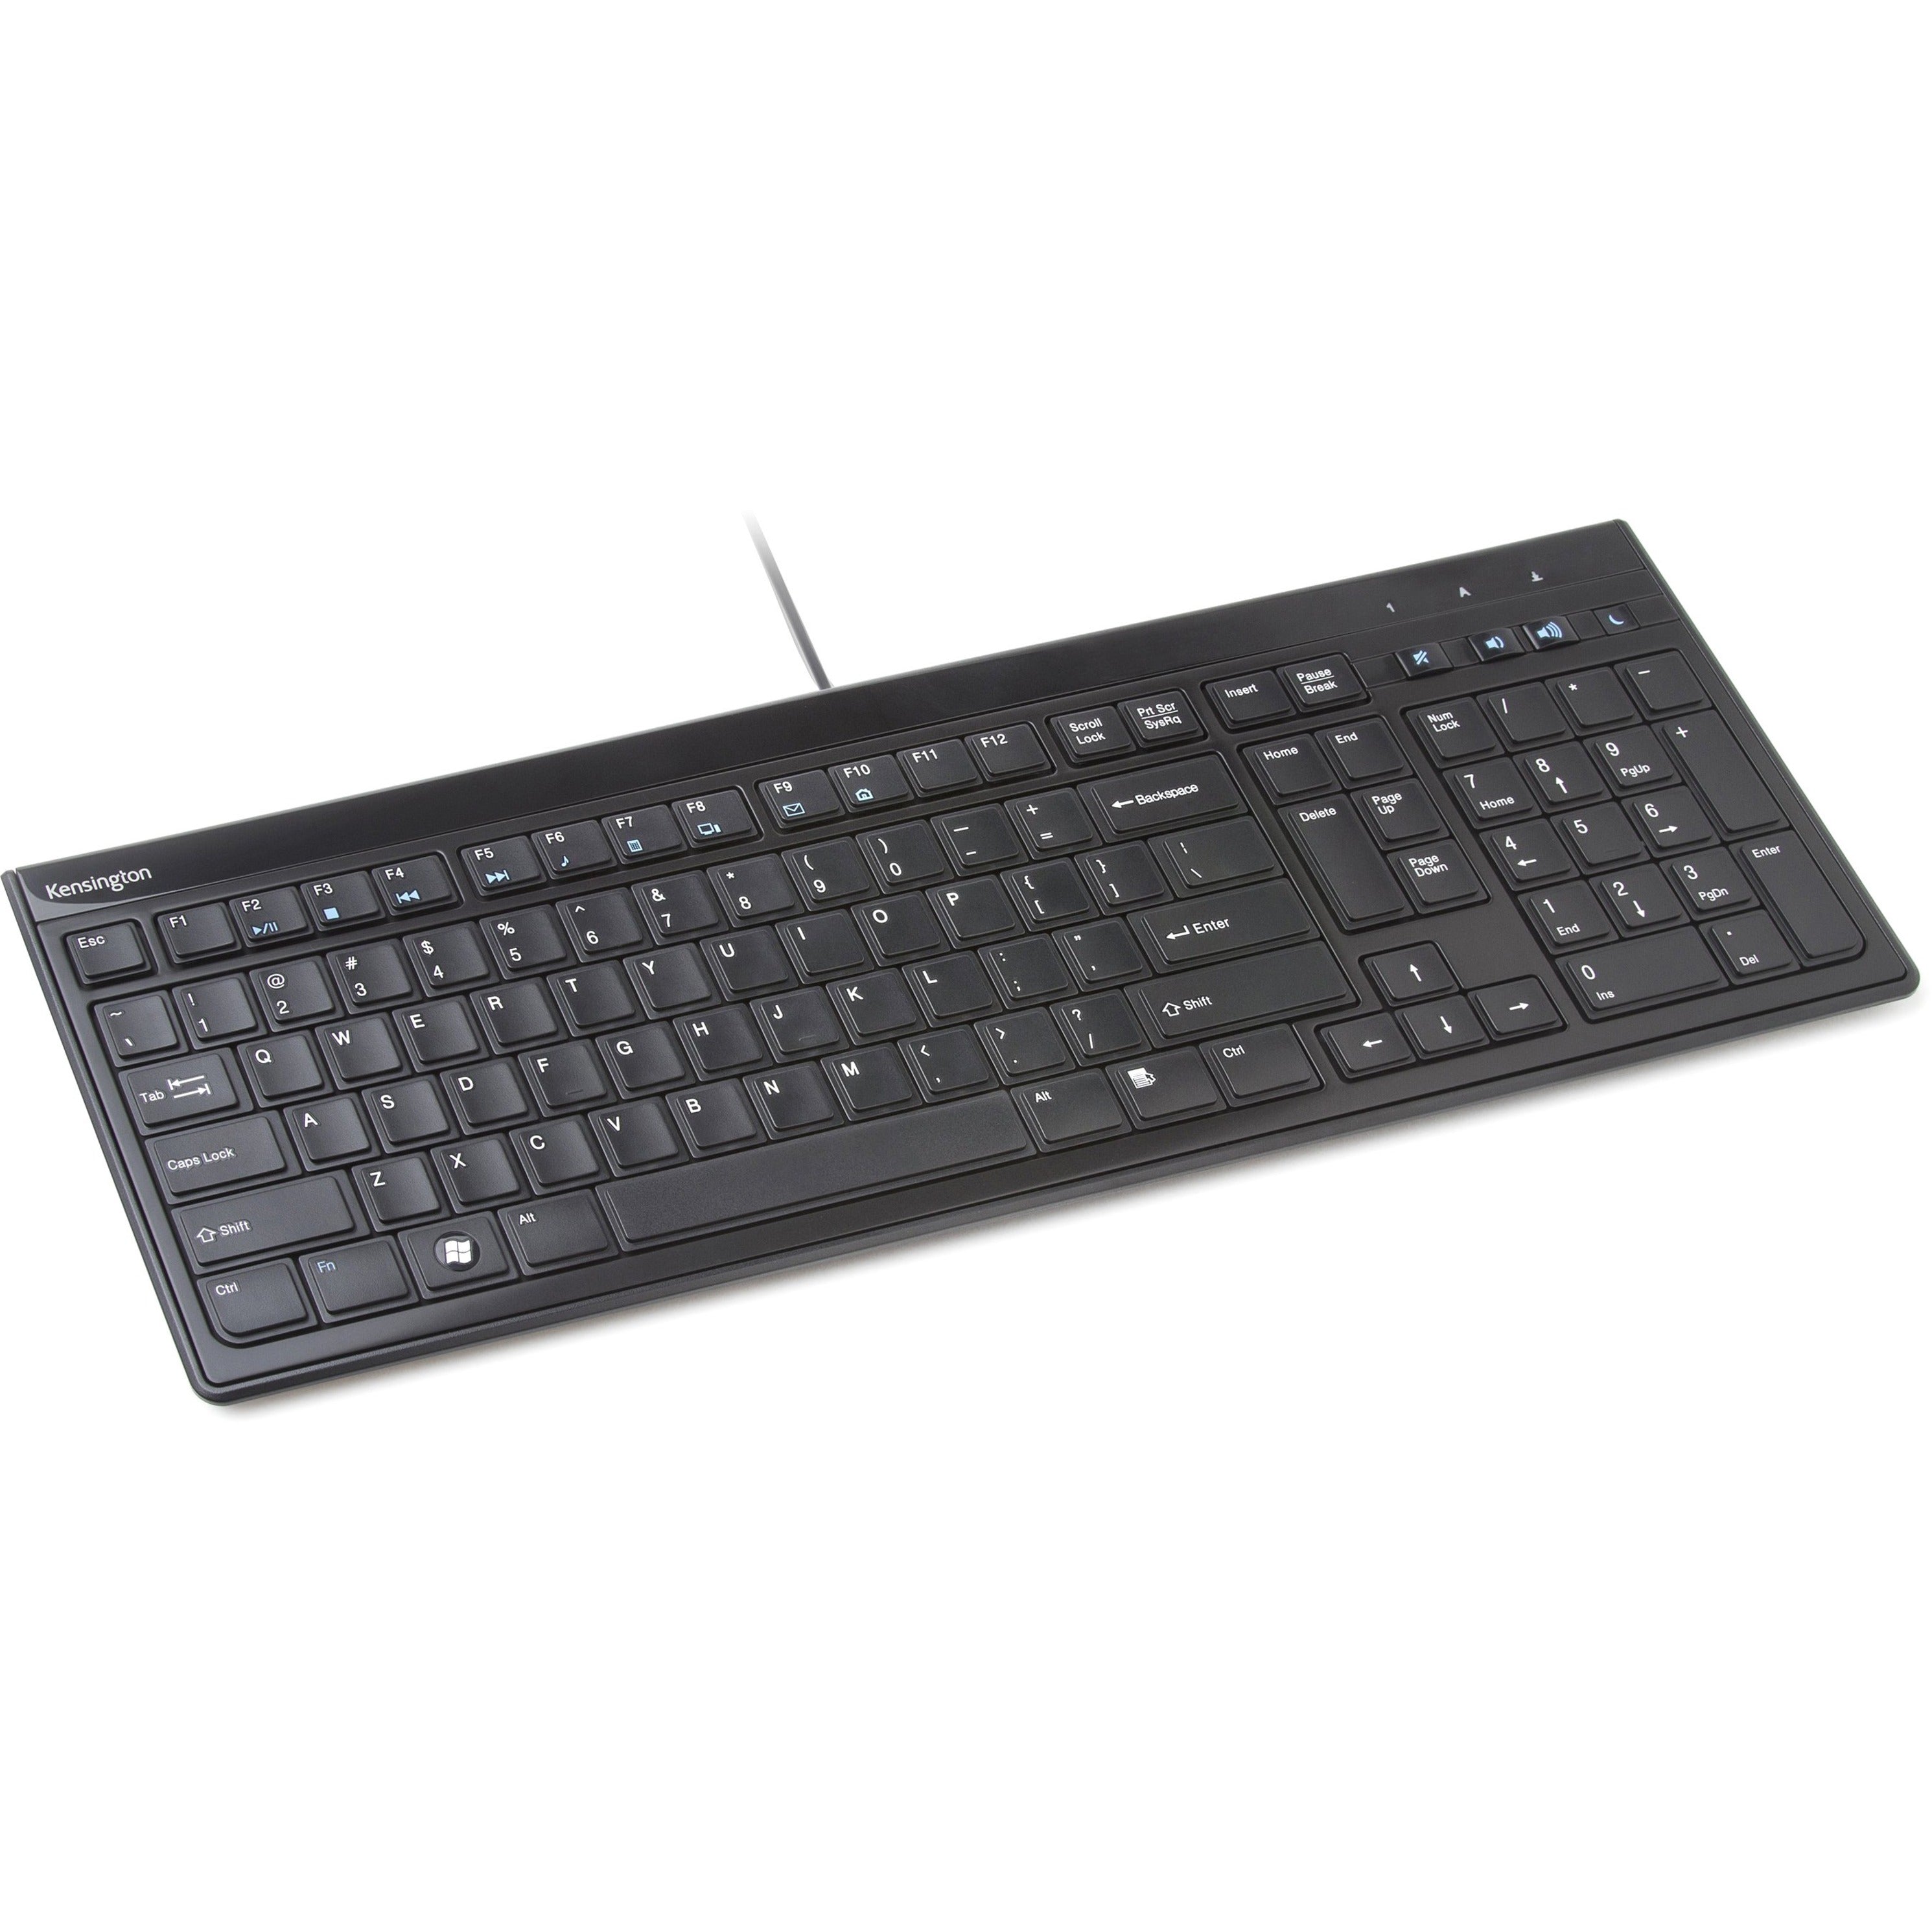 Kensington K72357USA Advance Fit Full-Size Slim Keyboard, Volume Control, Scissors Keys, USB Wired, 3 Year Warranty